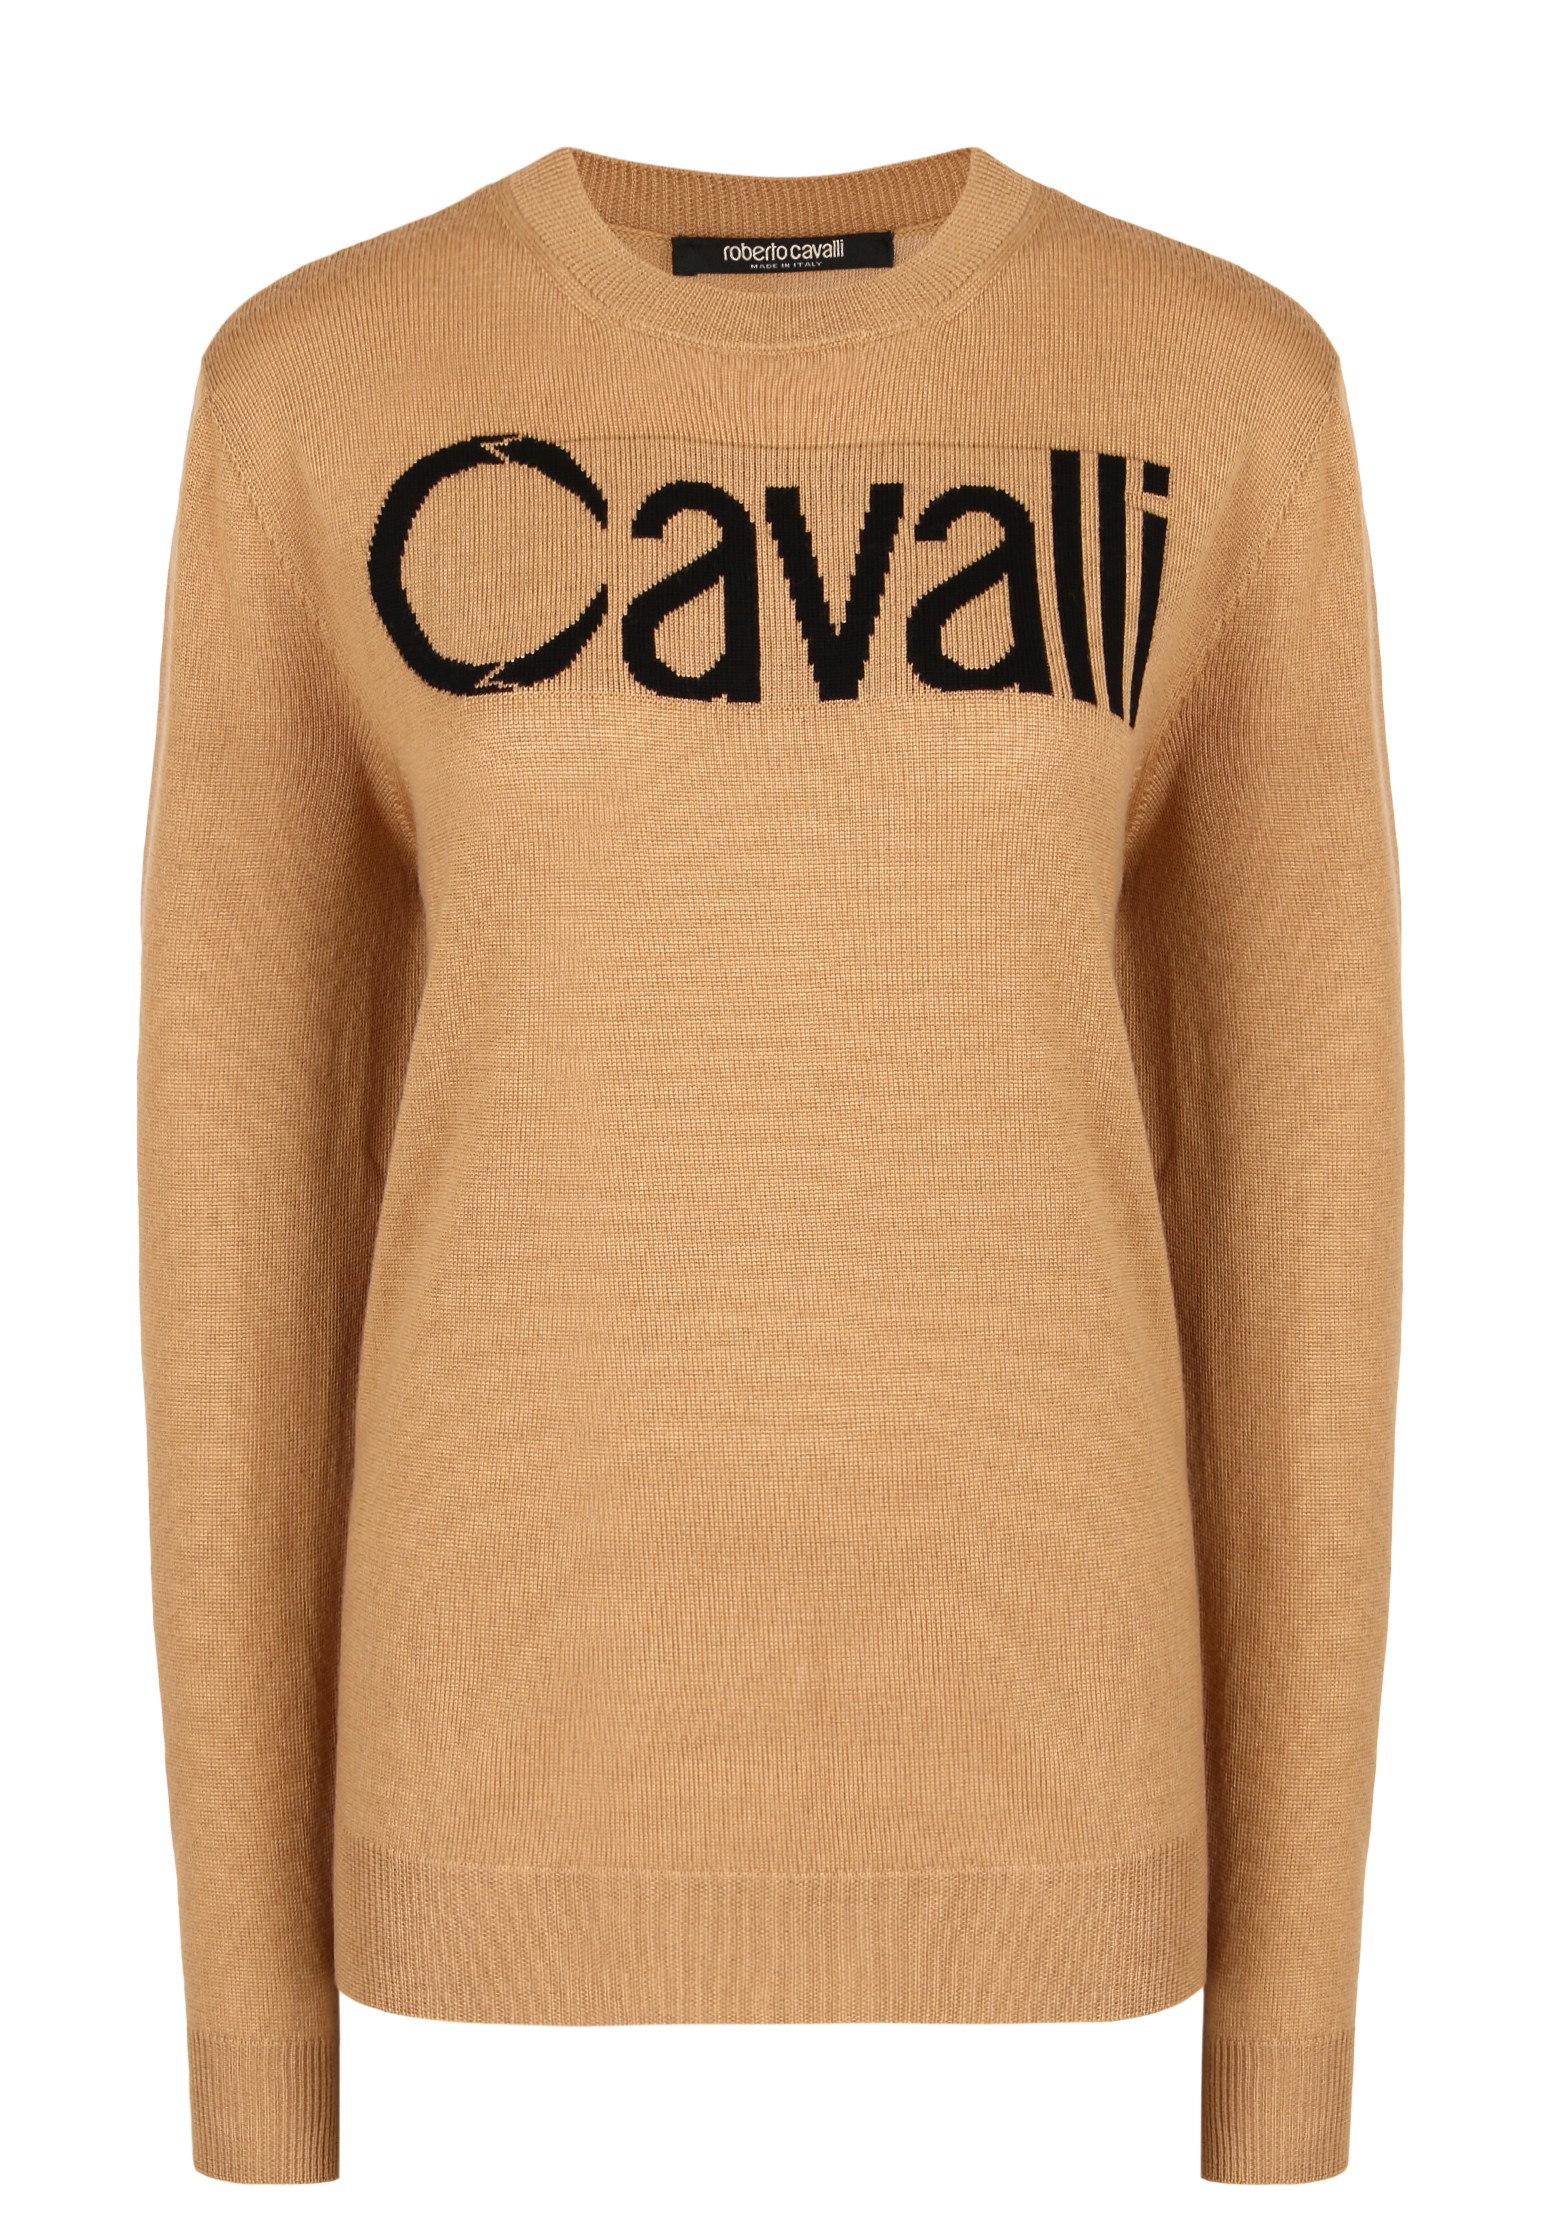 Джемпер мужской Roberto Cavalli 136599 коричневый S